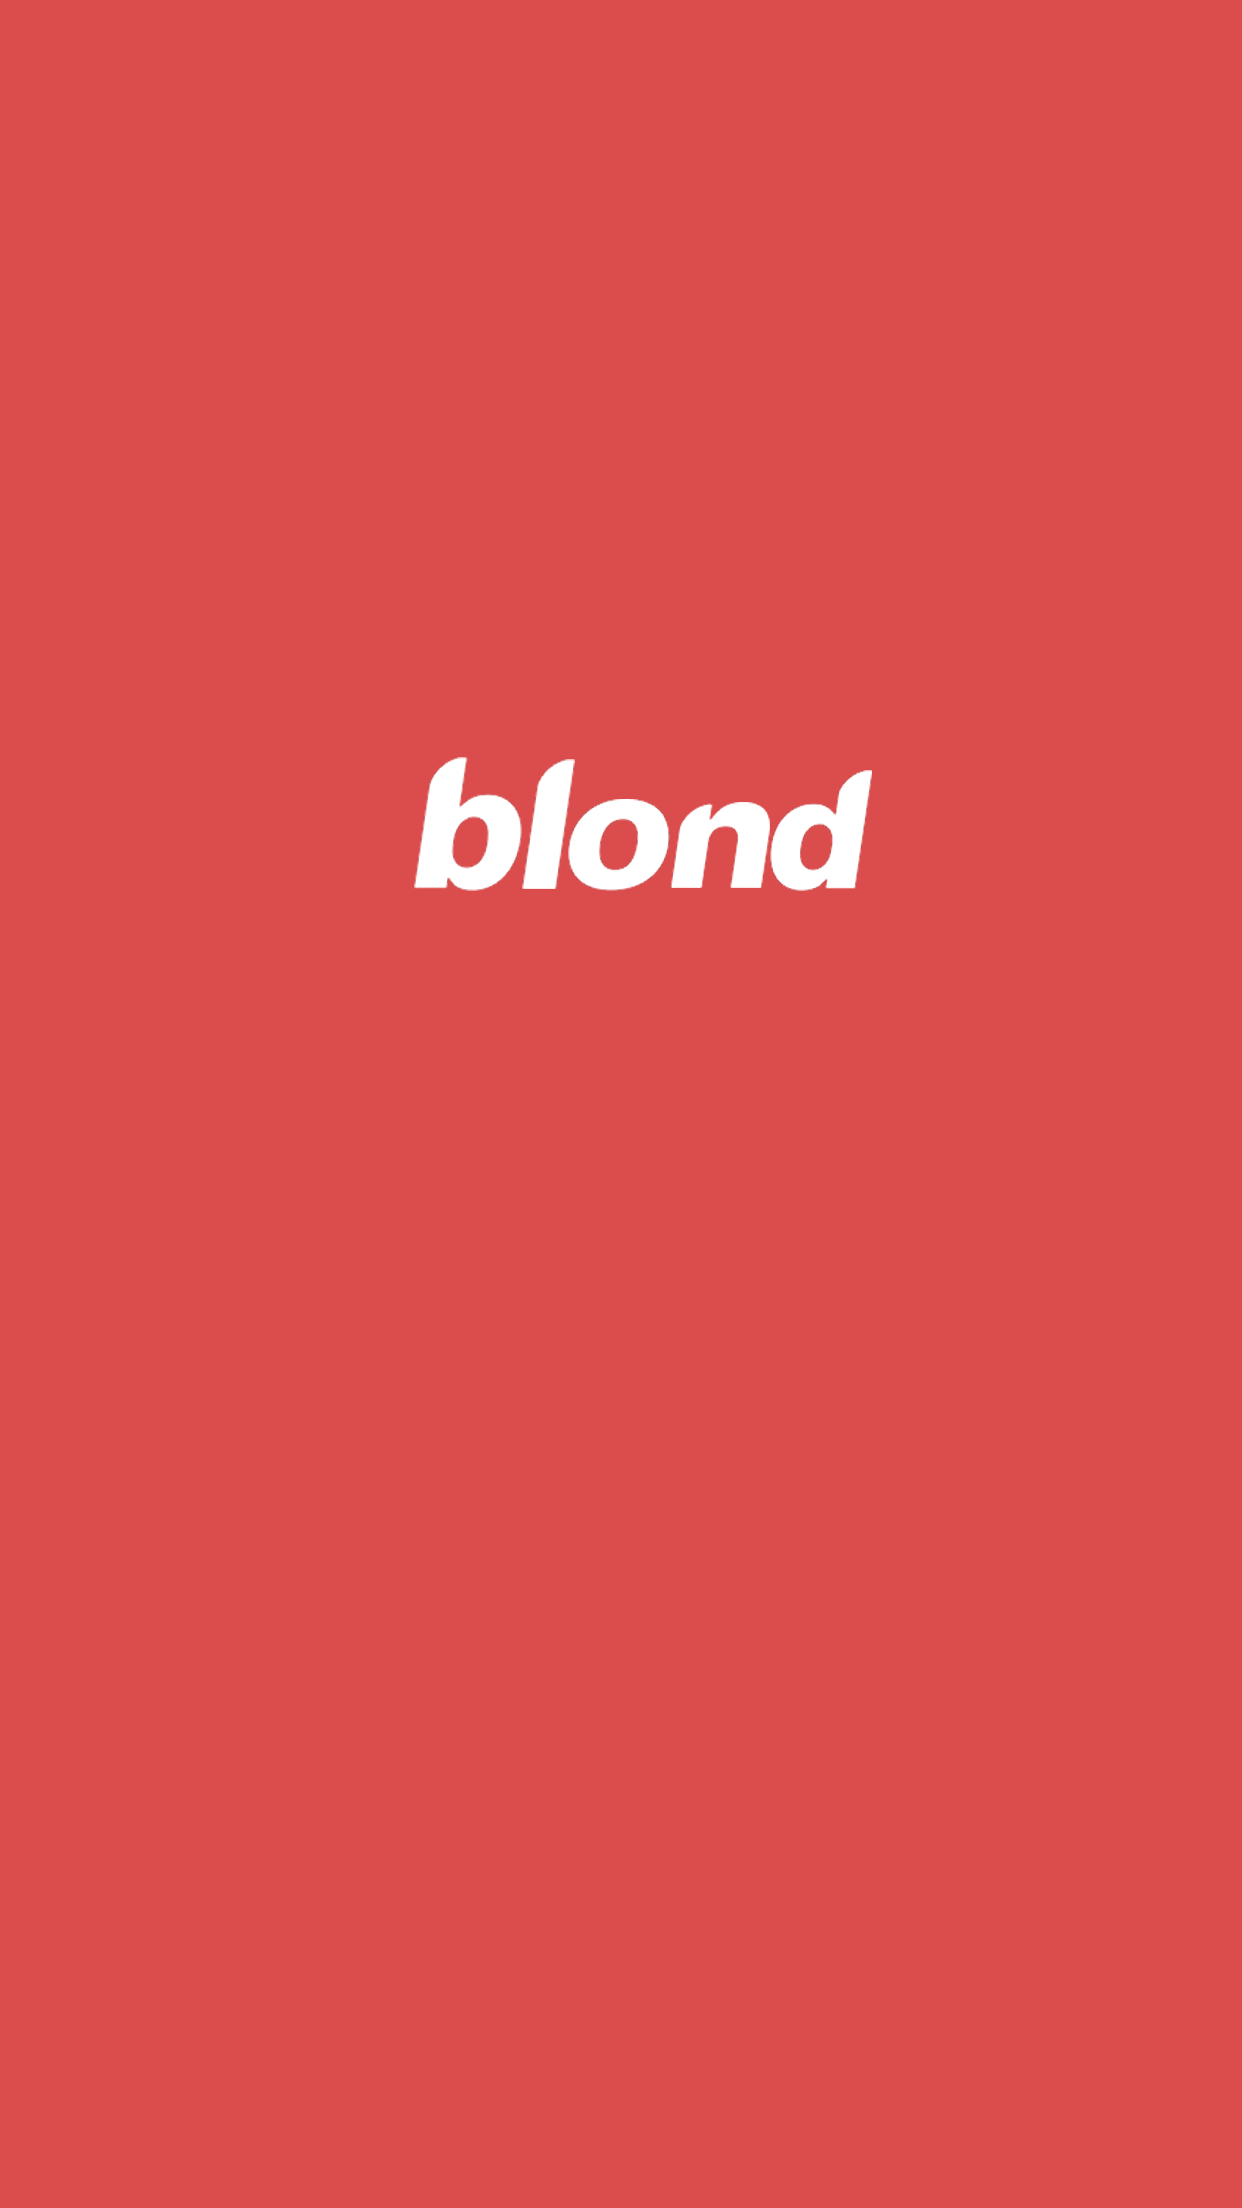 frank ocean blonde album art hd